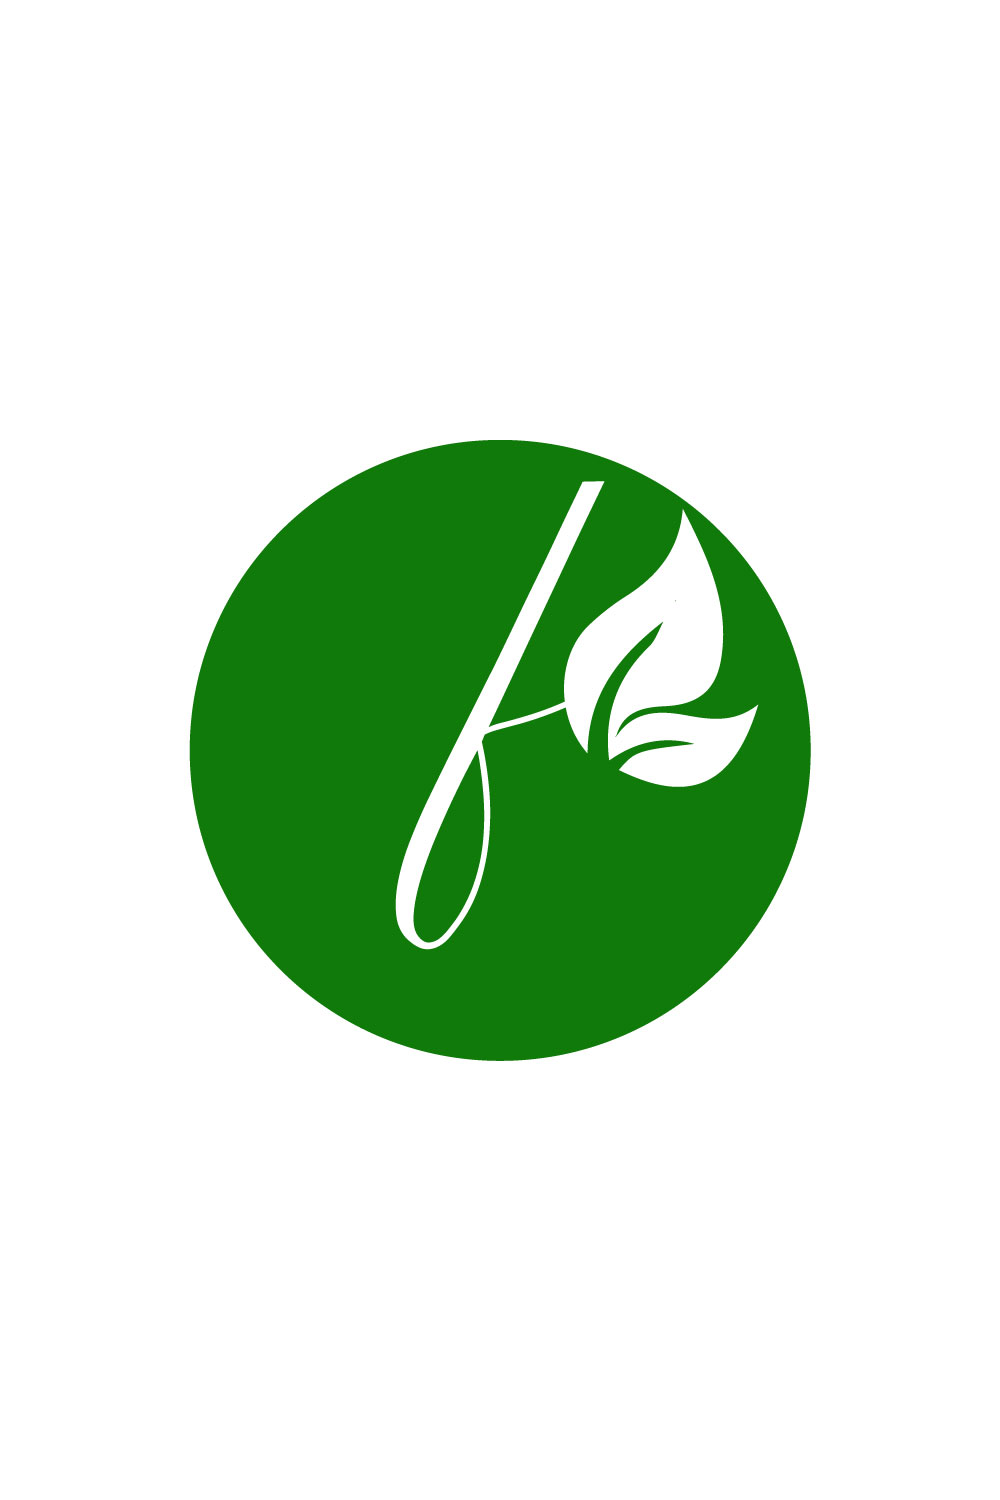 Free Green Letter logo pinterest preview image.